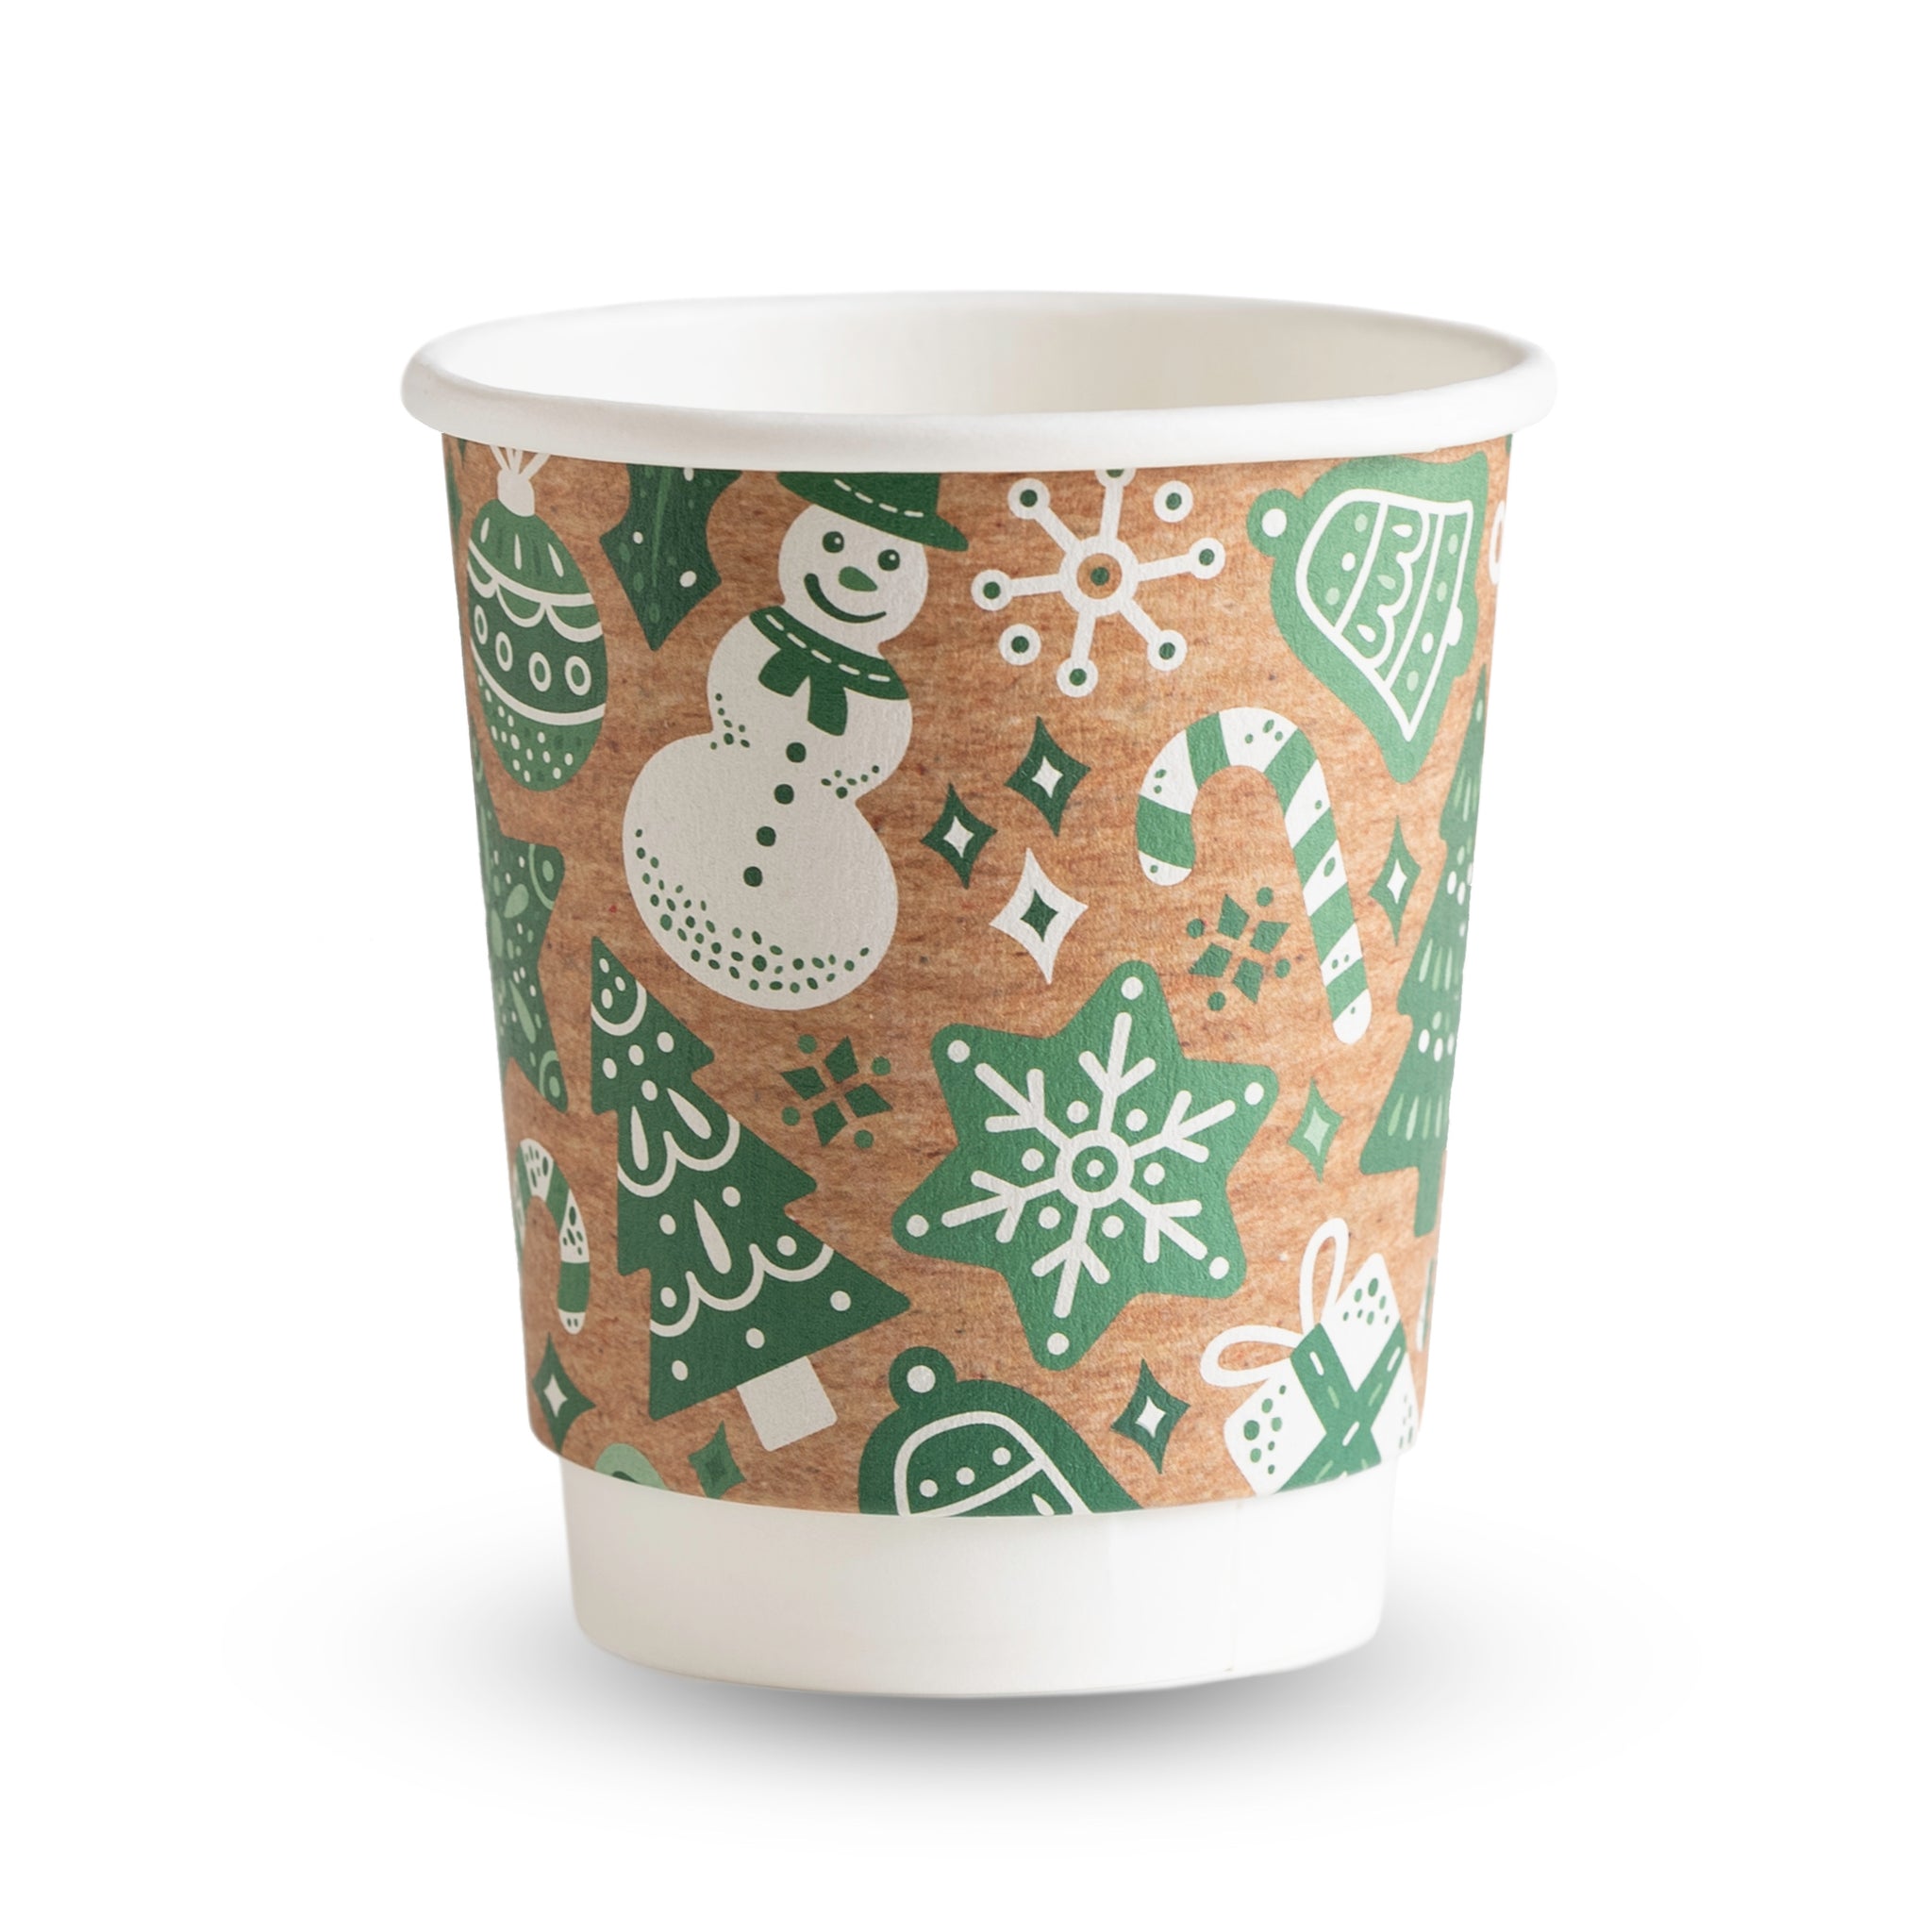 Papír poharak - Duplafalú karácsonyi papírpohár (8oz) 250 ml - 25 db/csomag - Greenstic